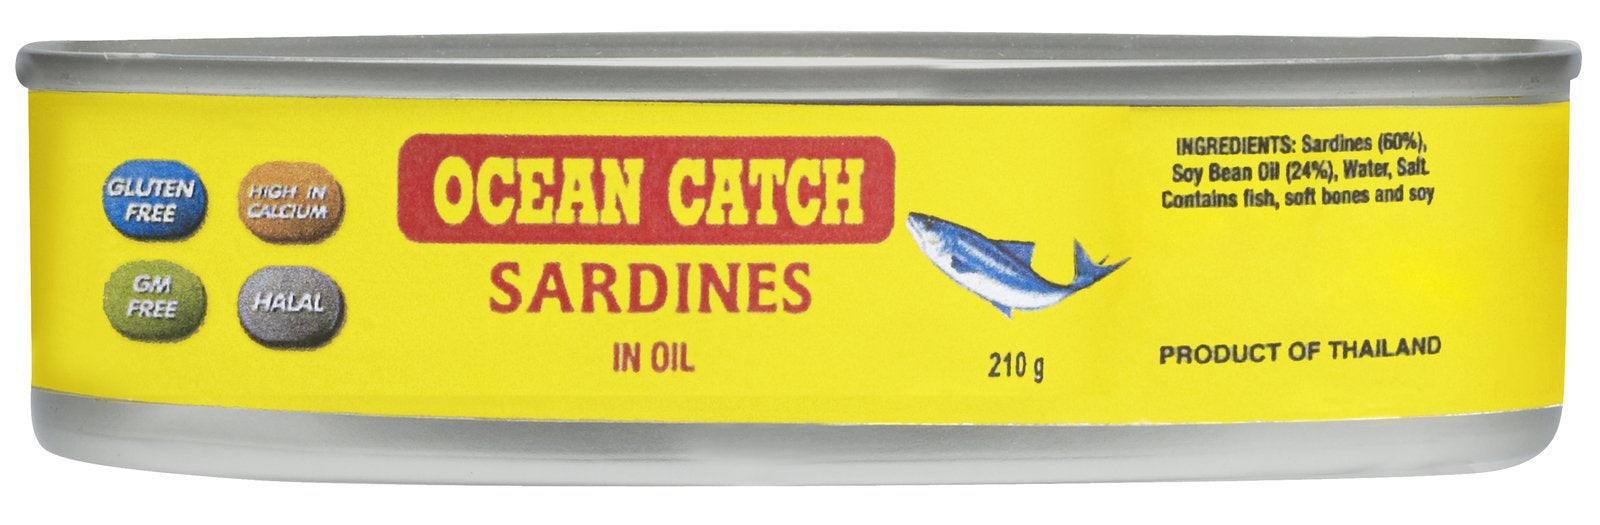 Ocean Catch Sardines in Oil 210g